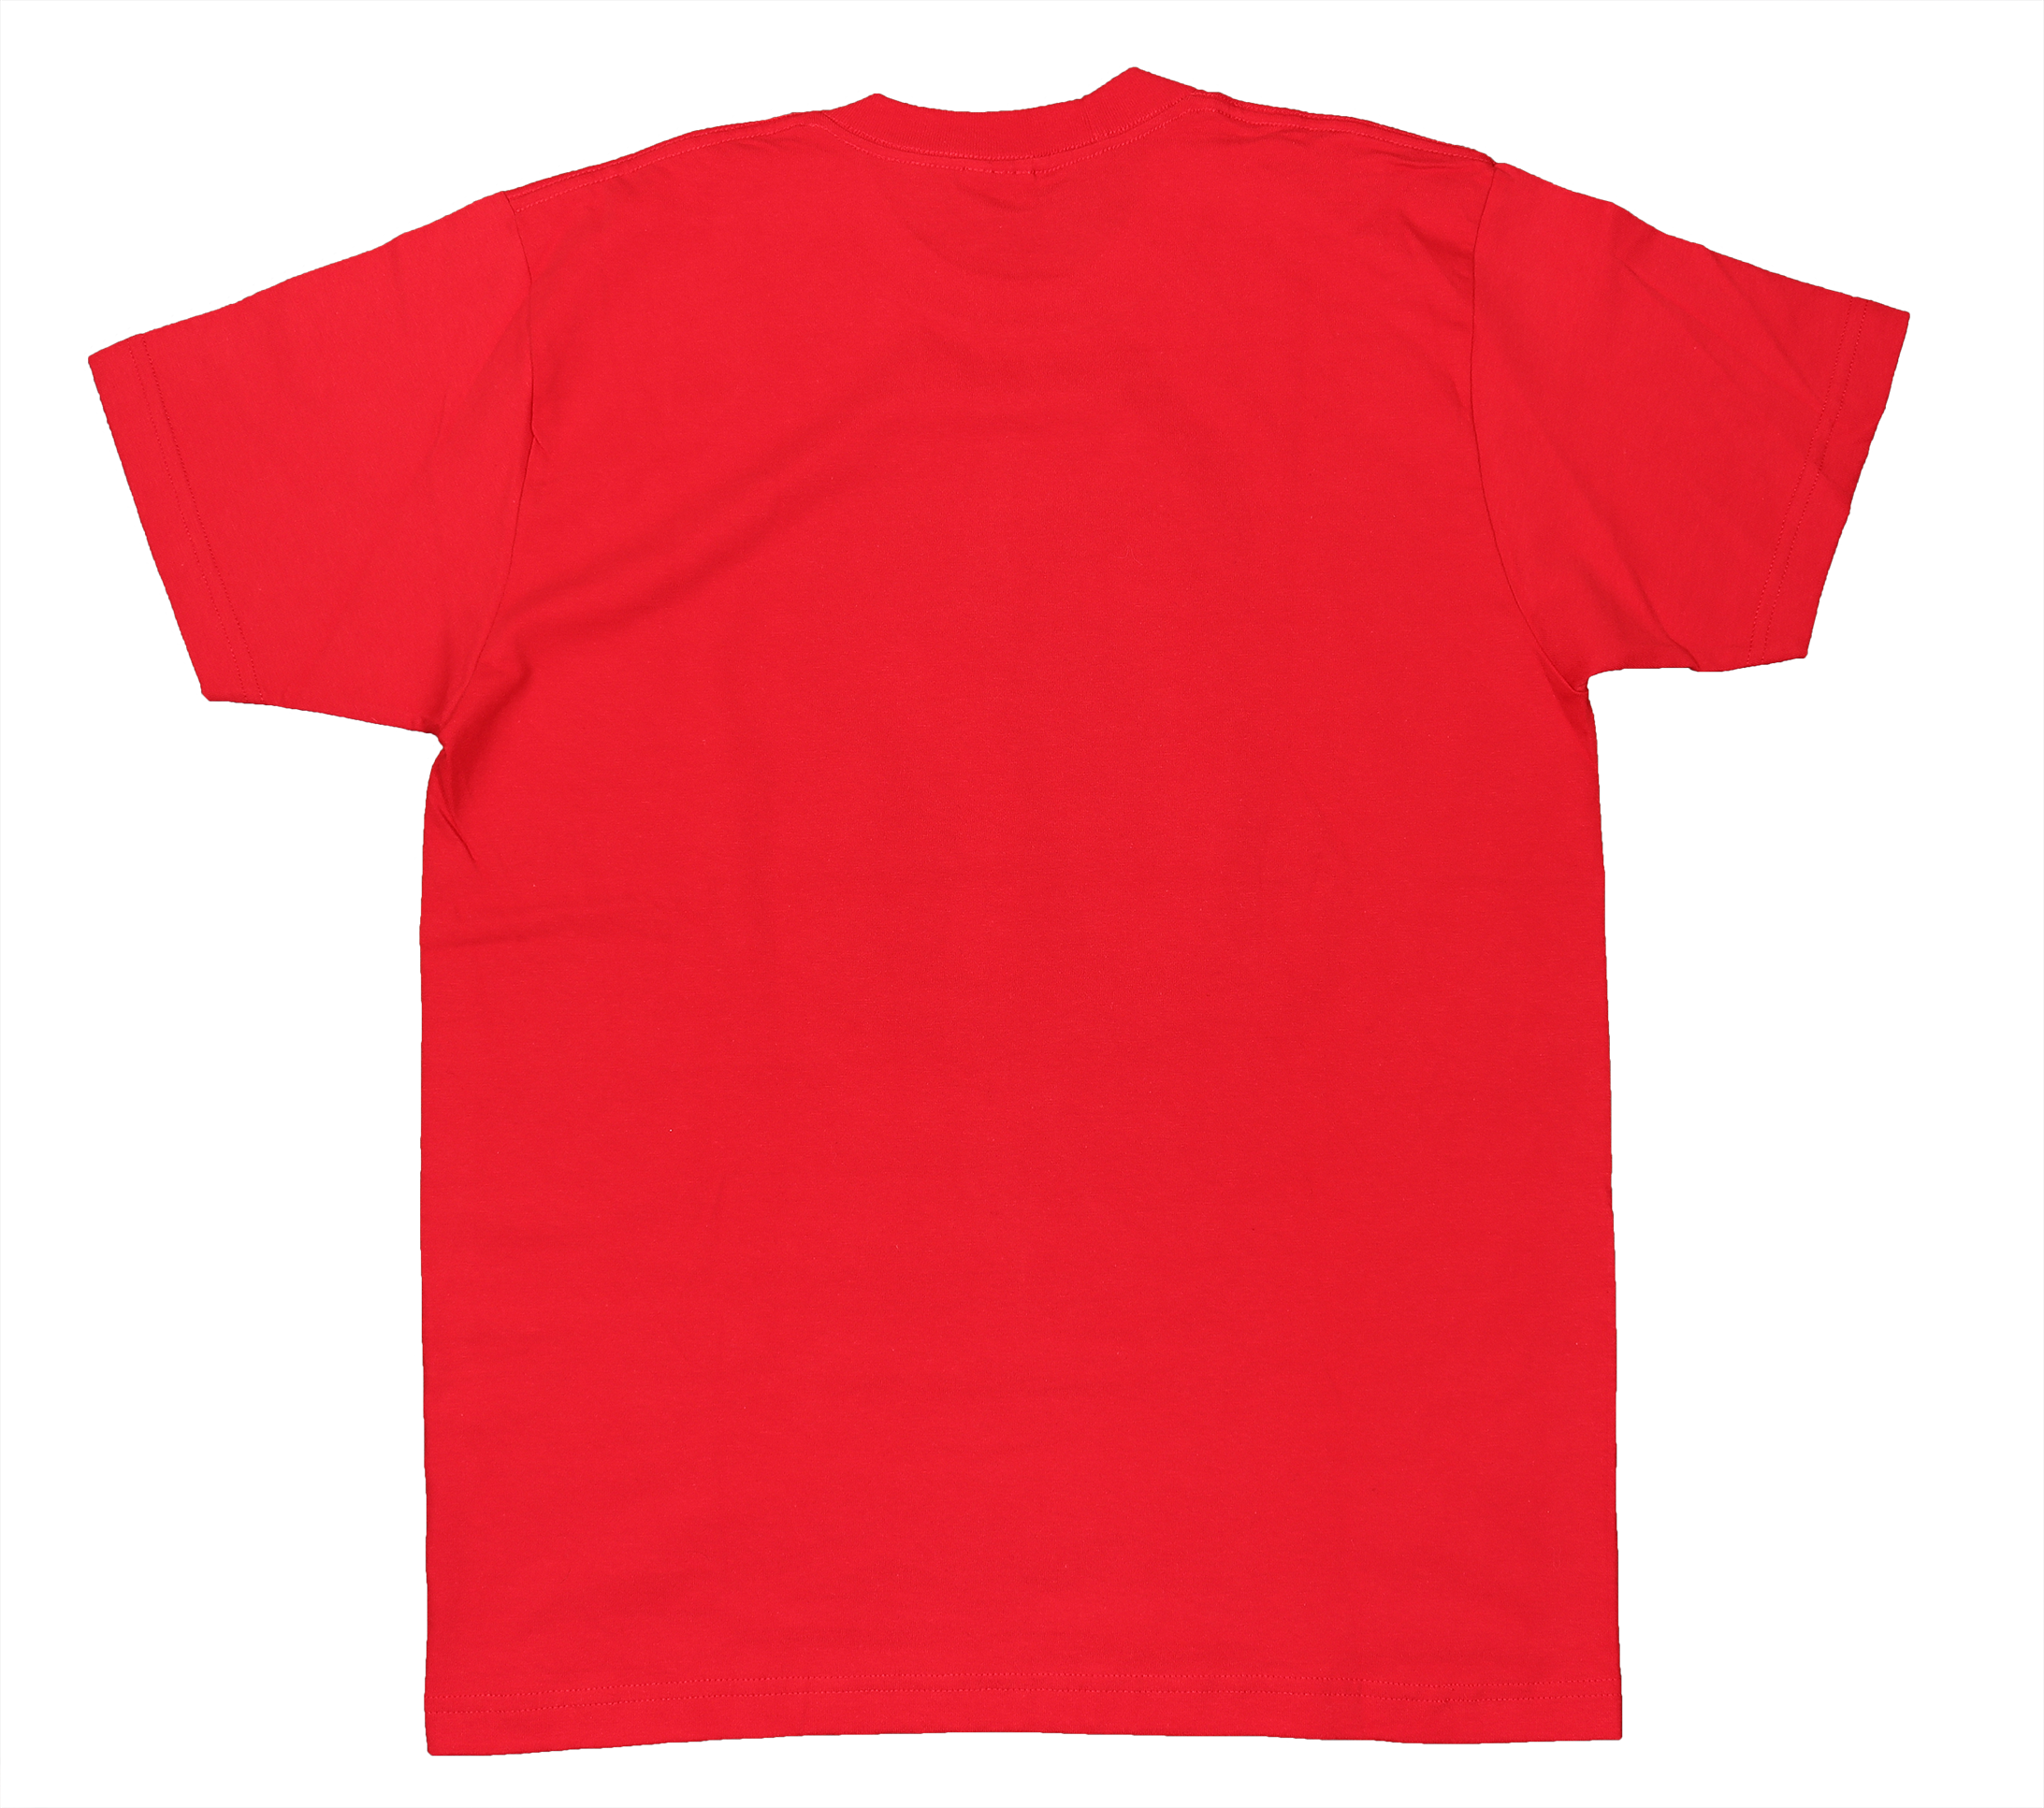 FW14 Sample Unreleased Ballerina T-Shirt - Red